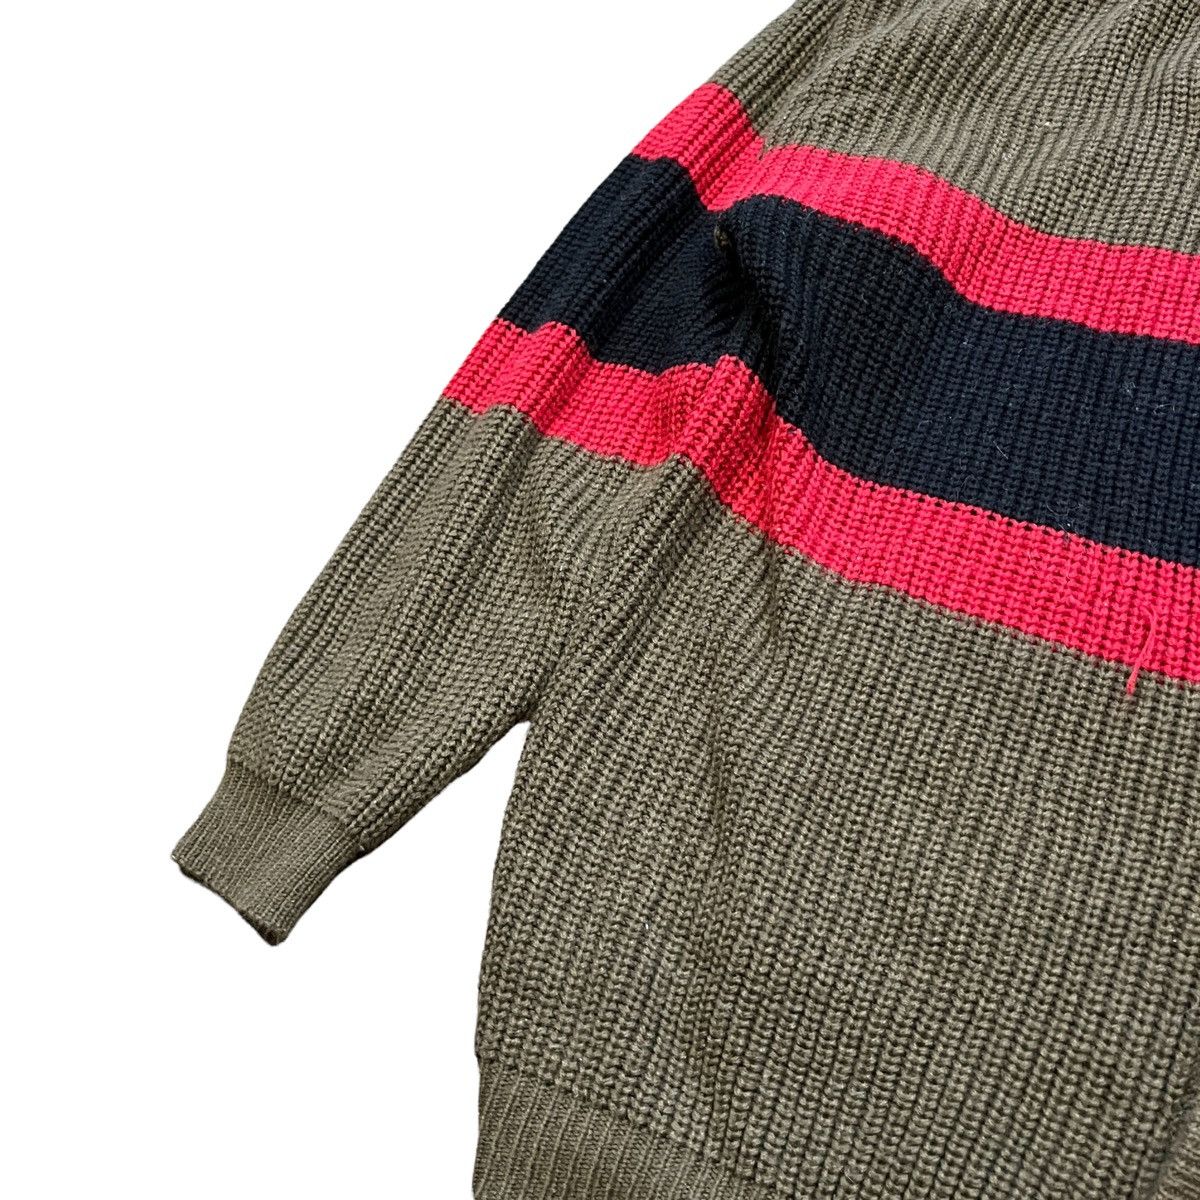 Vintage Vintage Zepellin Striped Cardigan Sweater Size US L / EU 52-54 / 3 - 2 Preview